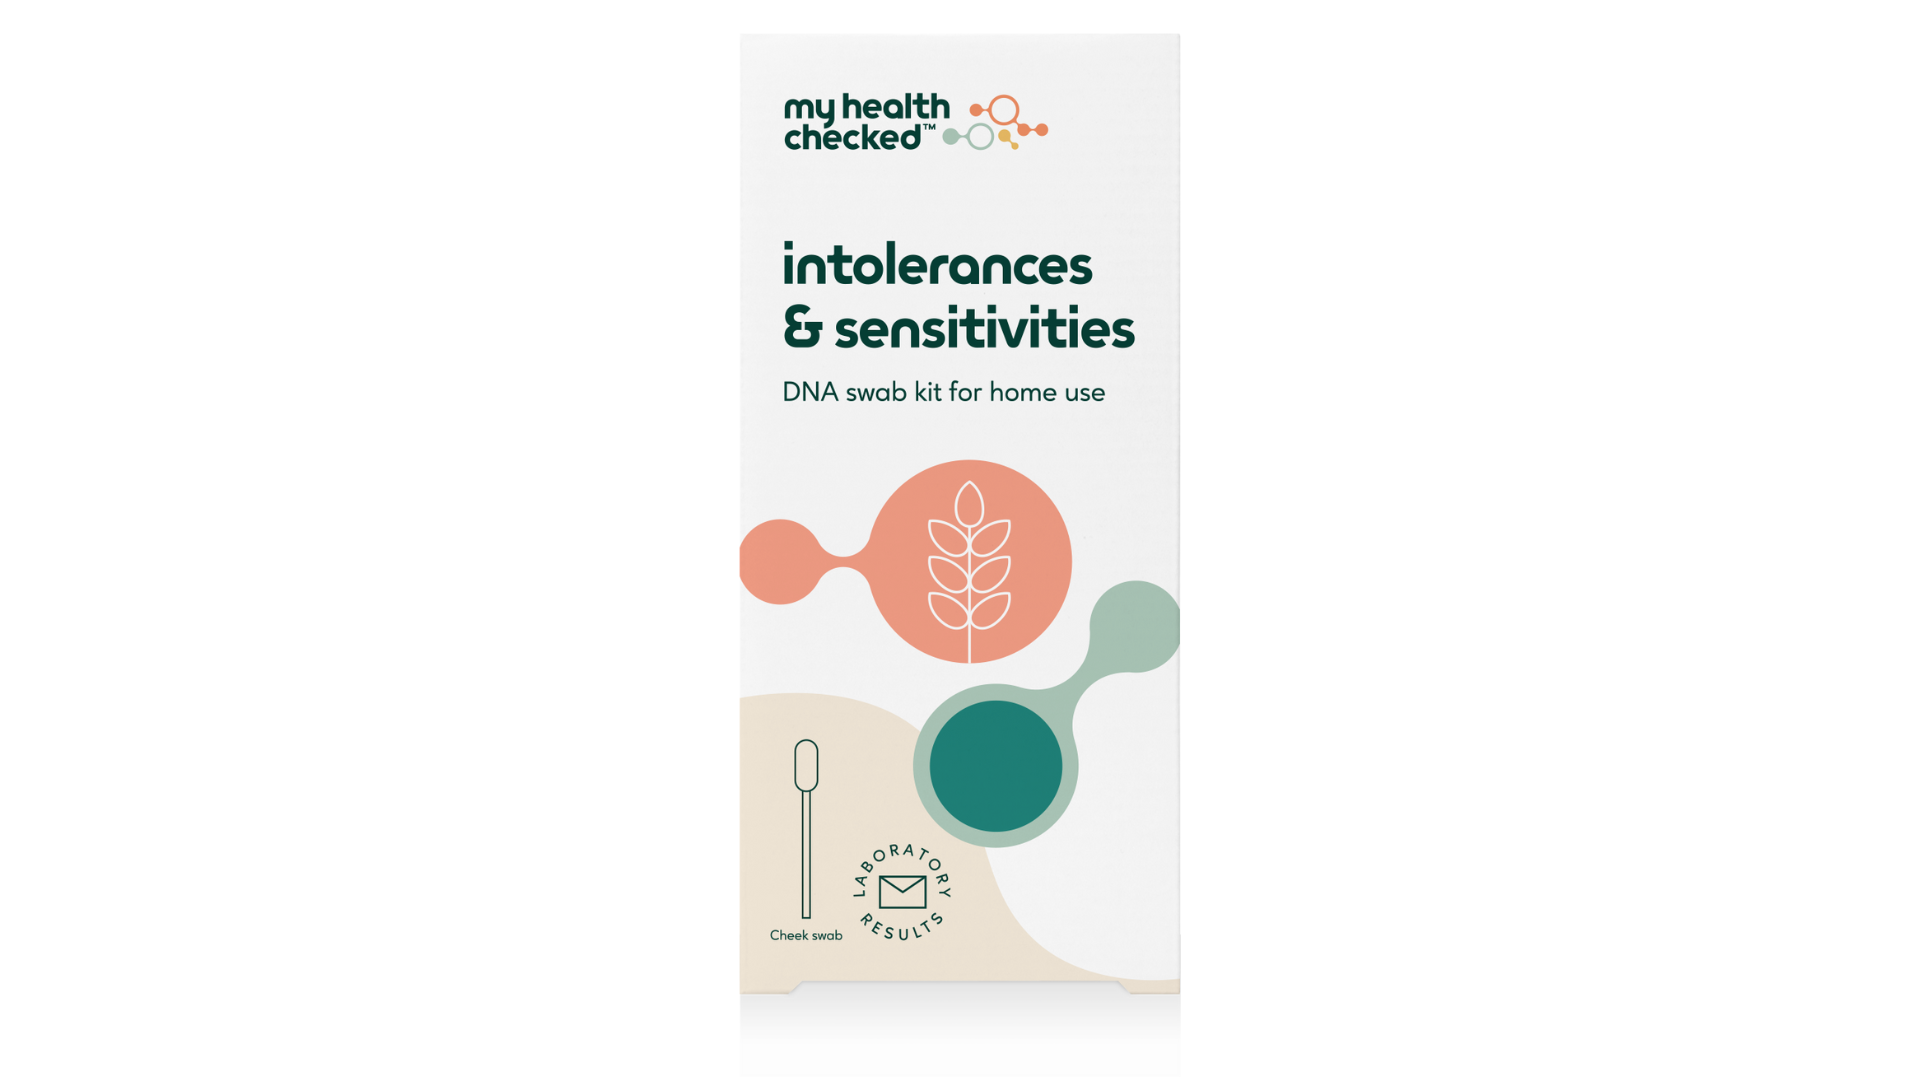 MyHealthChecked's Intolerances & Sensitives DNA Test